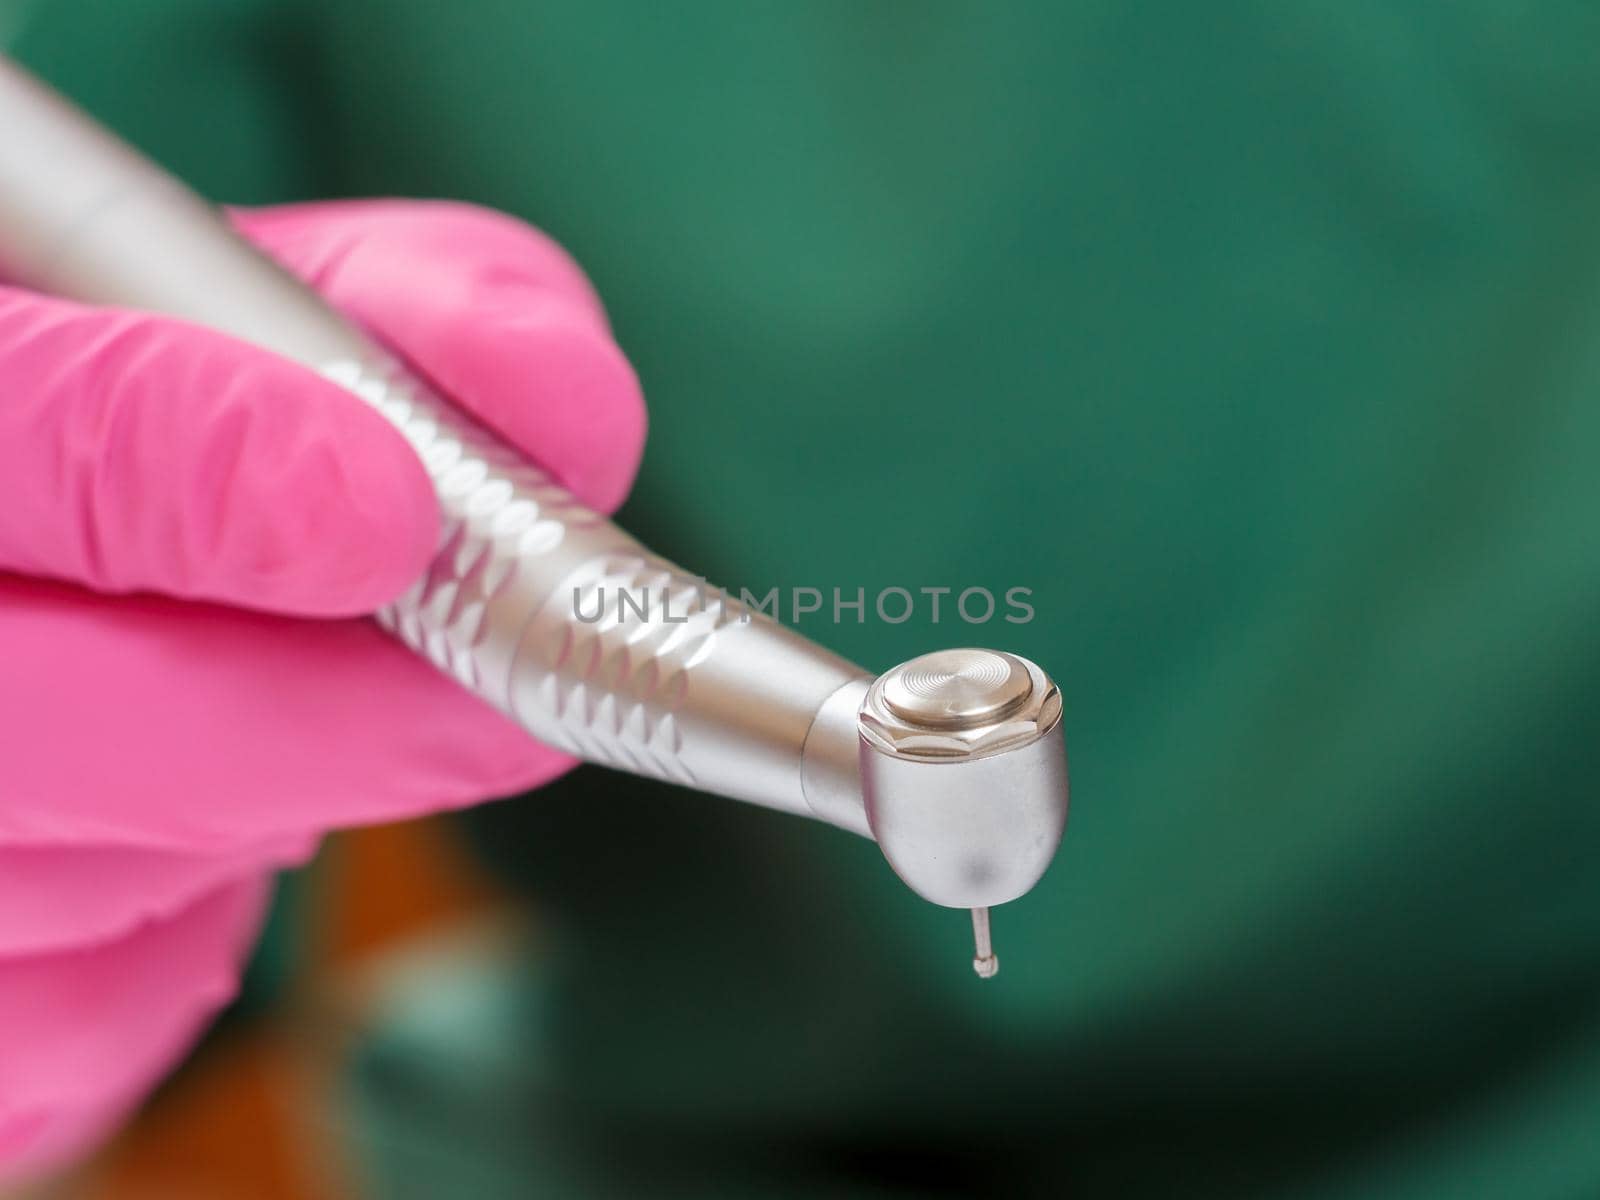 Dentist's hand in latex examination glove with dental handpiece. by mvg6894